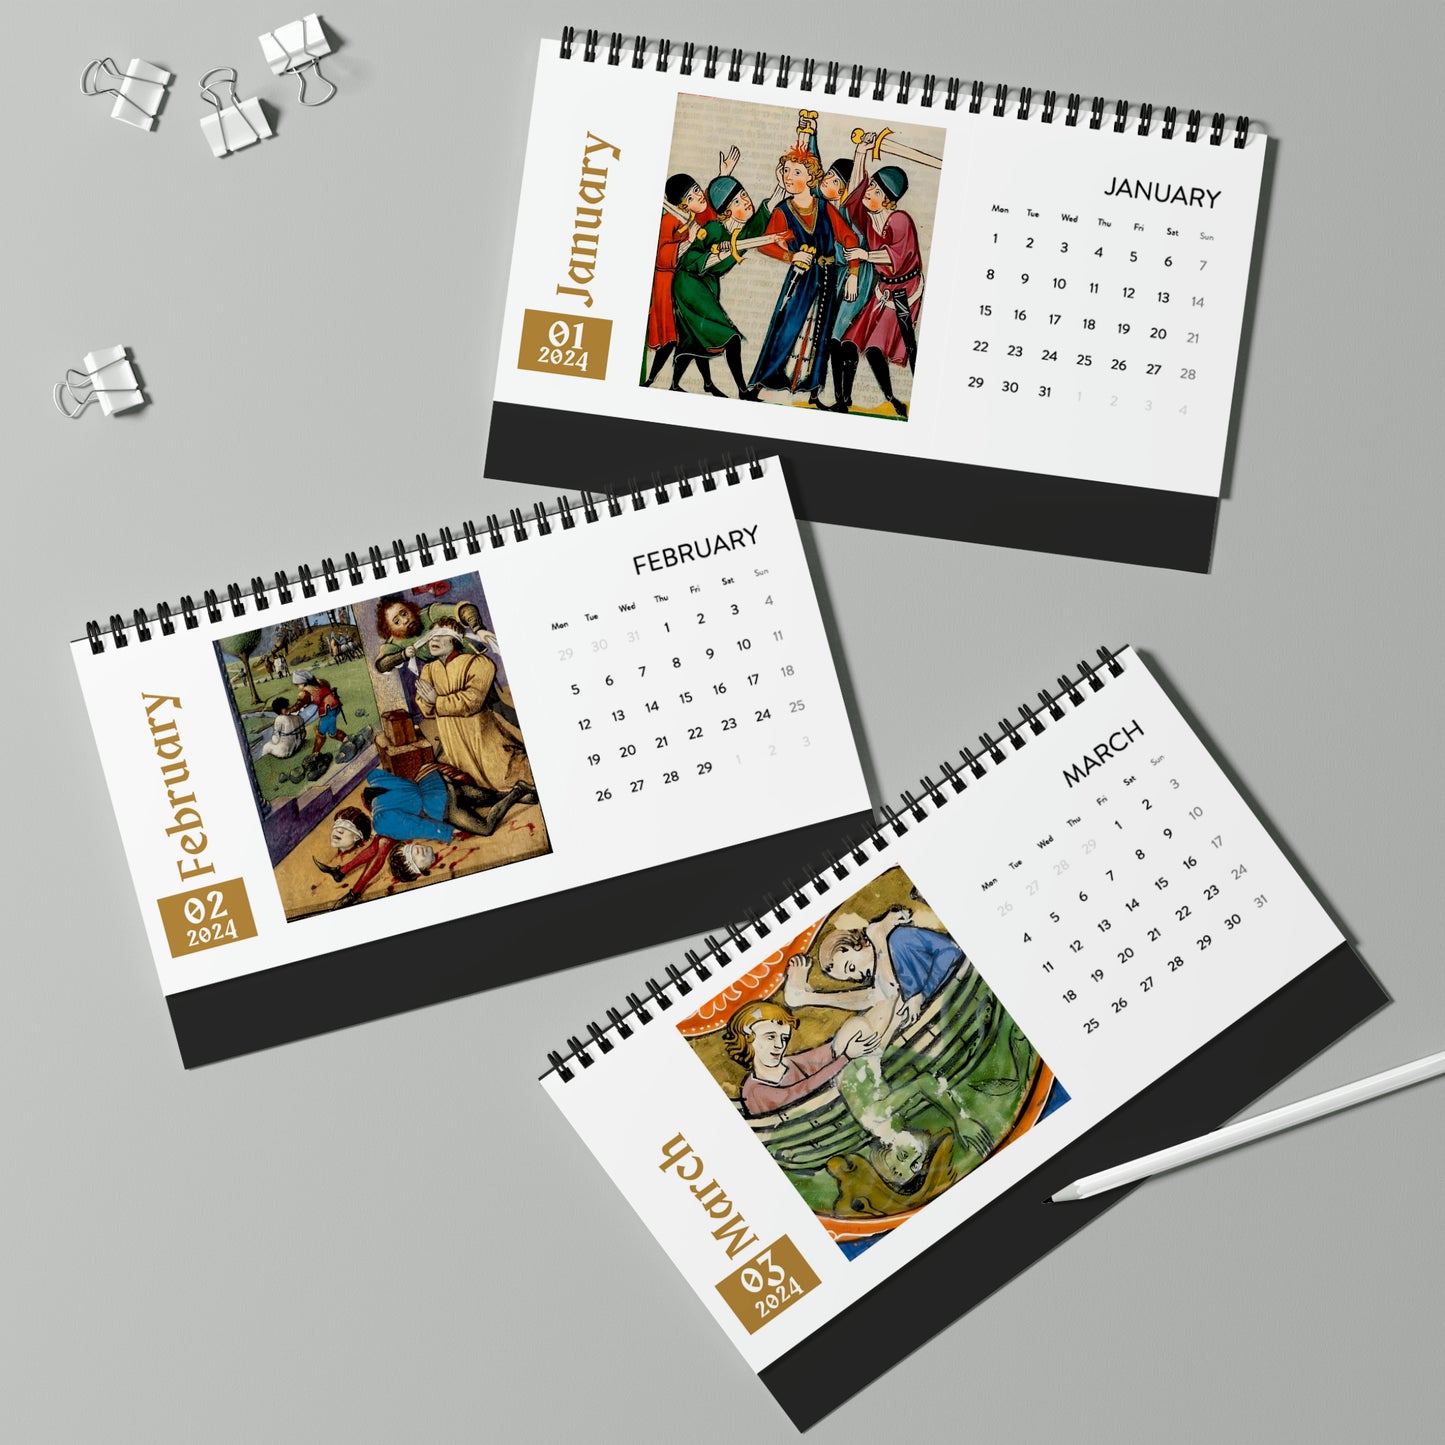 Medieval Mayhem Desk Calendar (2024)